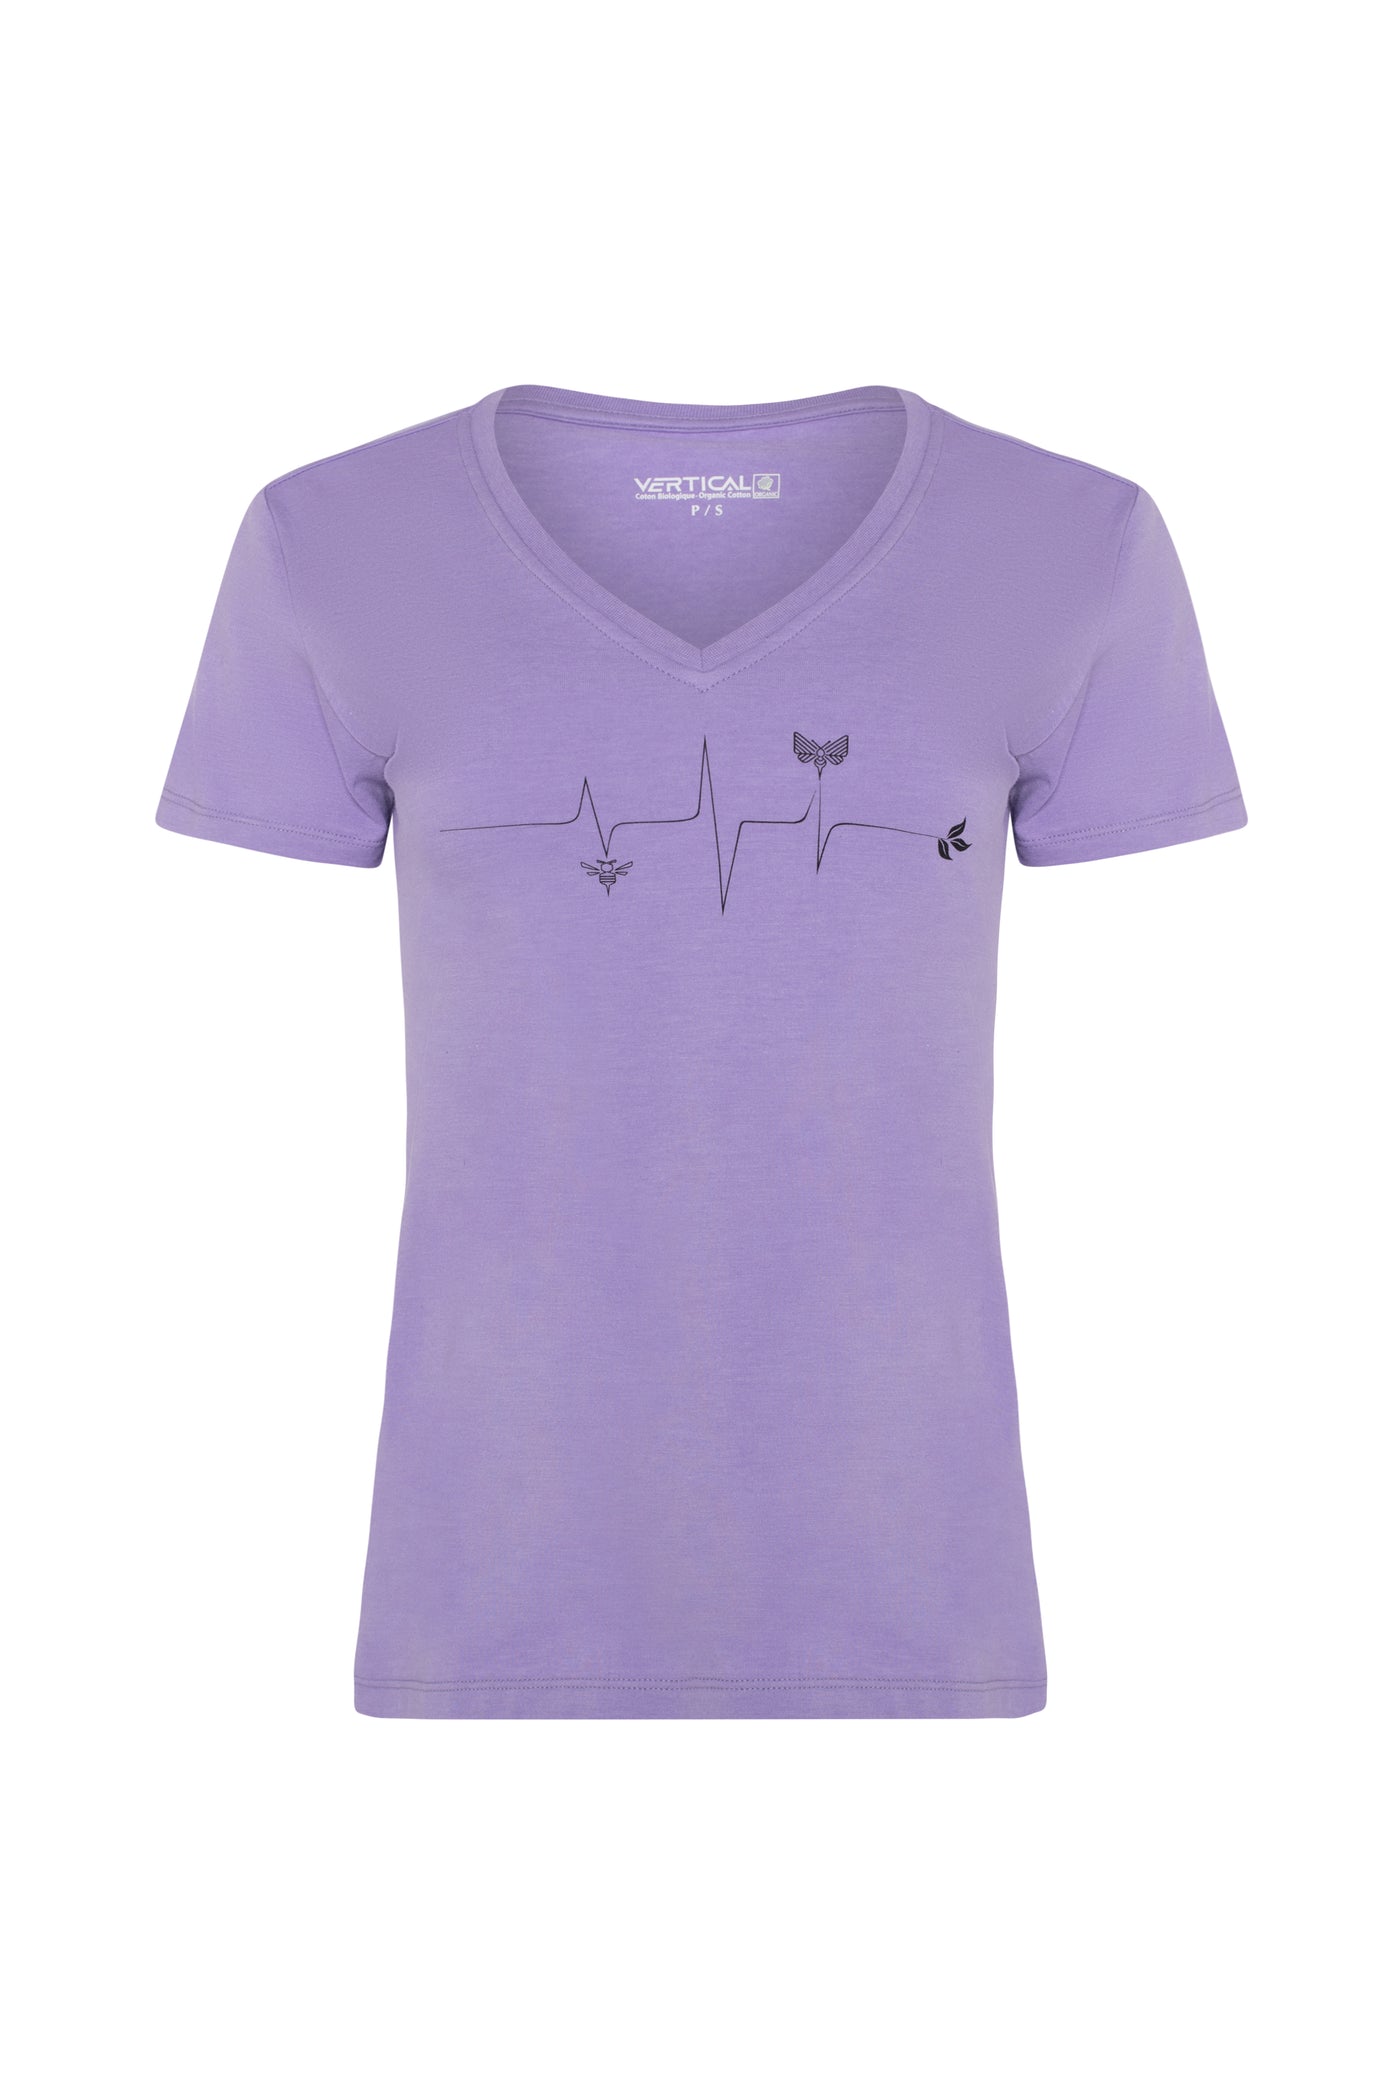 T-Shirt Battement de ❤️ - Femme - 50% de rabais